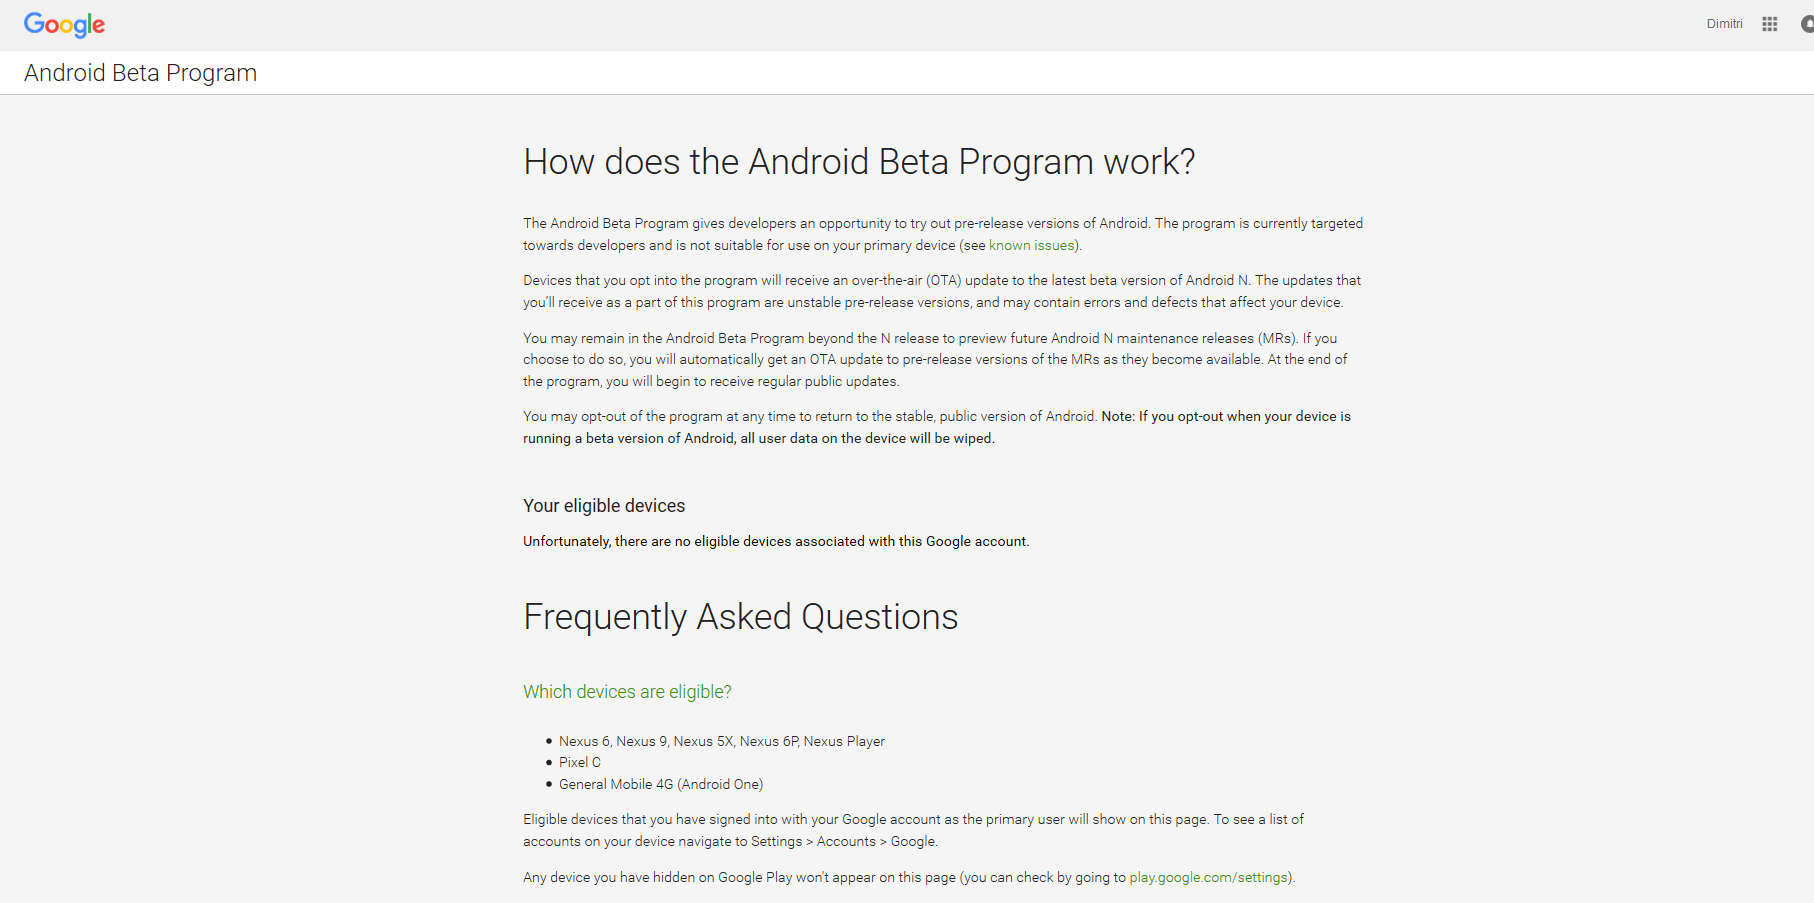 Google Android Beta Program